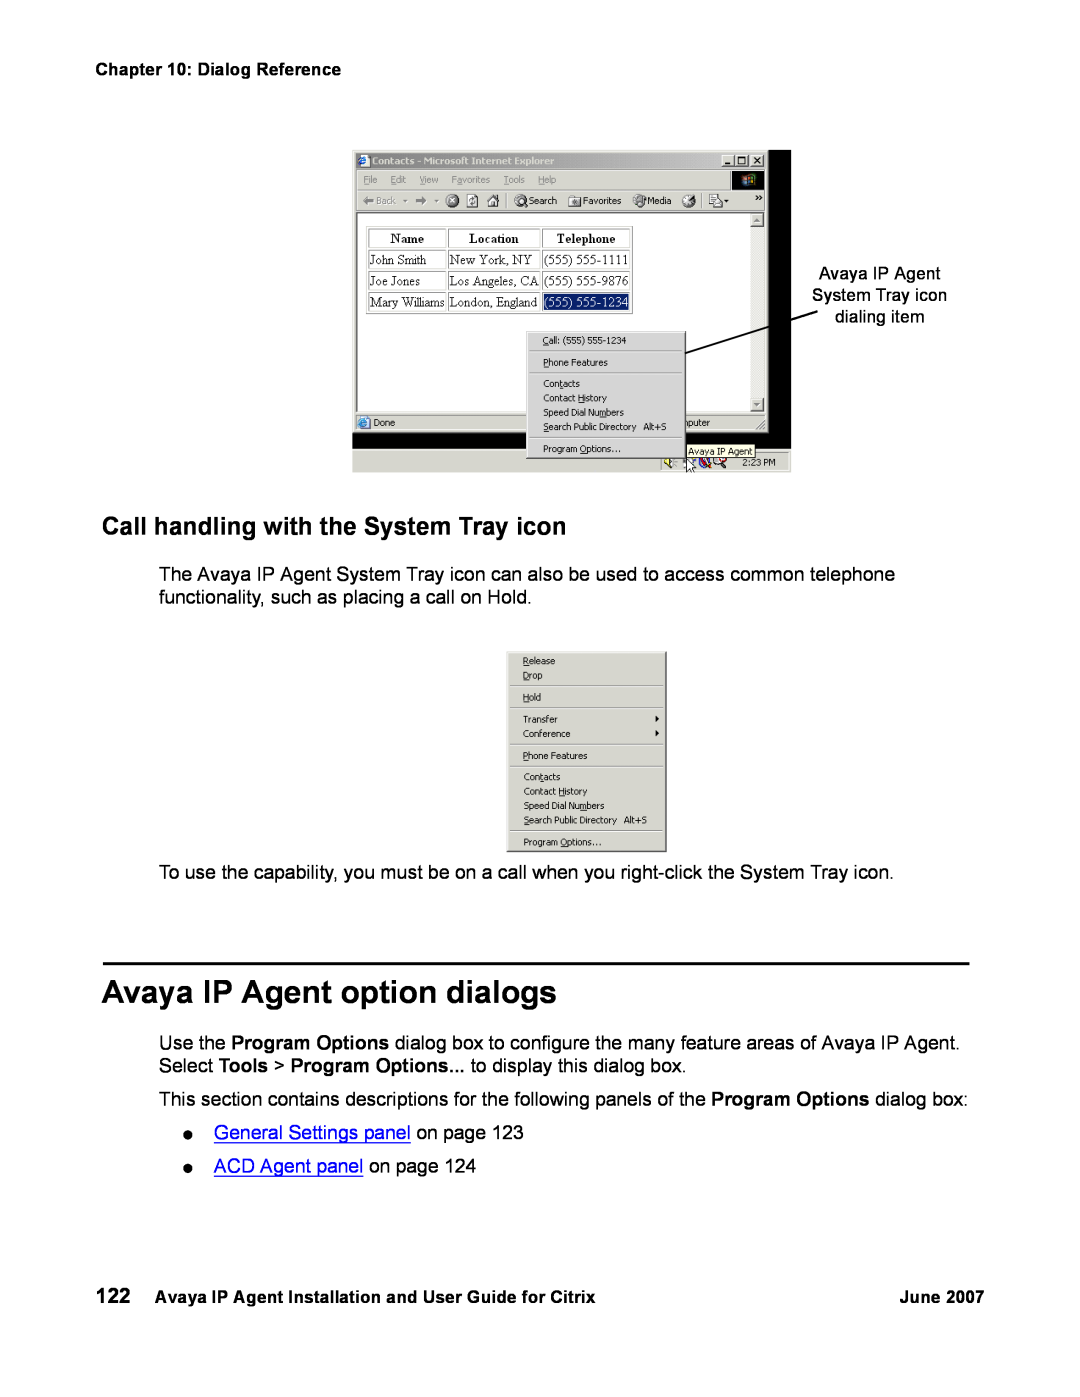 Avaya 7 manual Avaya IP Agent option dialogs, Call handling with the System Tray icon 